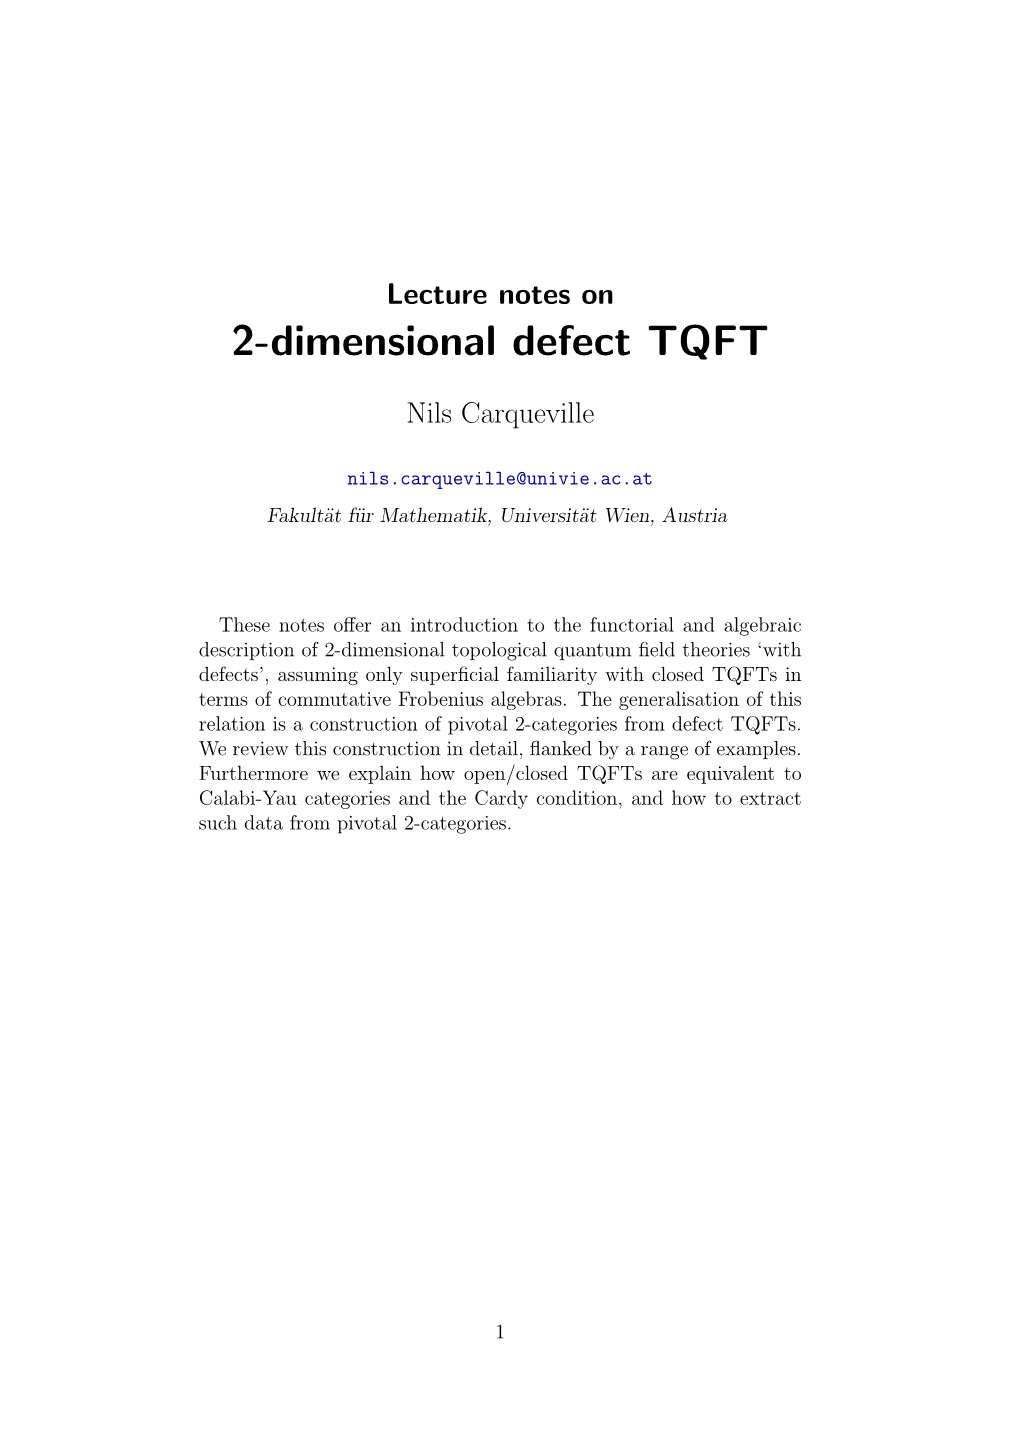 2-Dimensional Defect TQFT